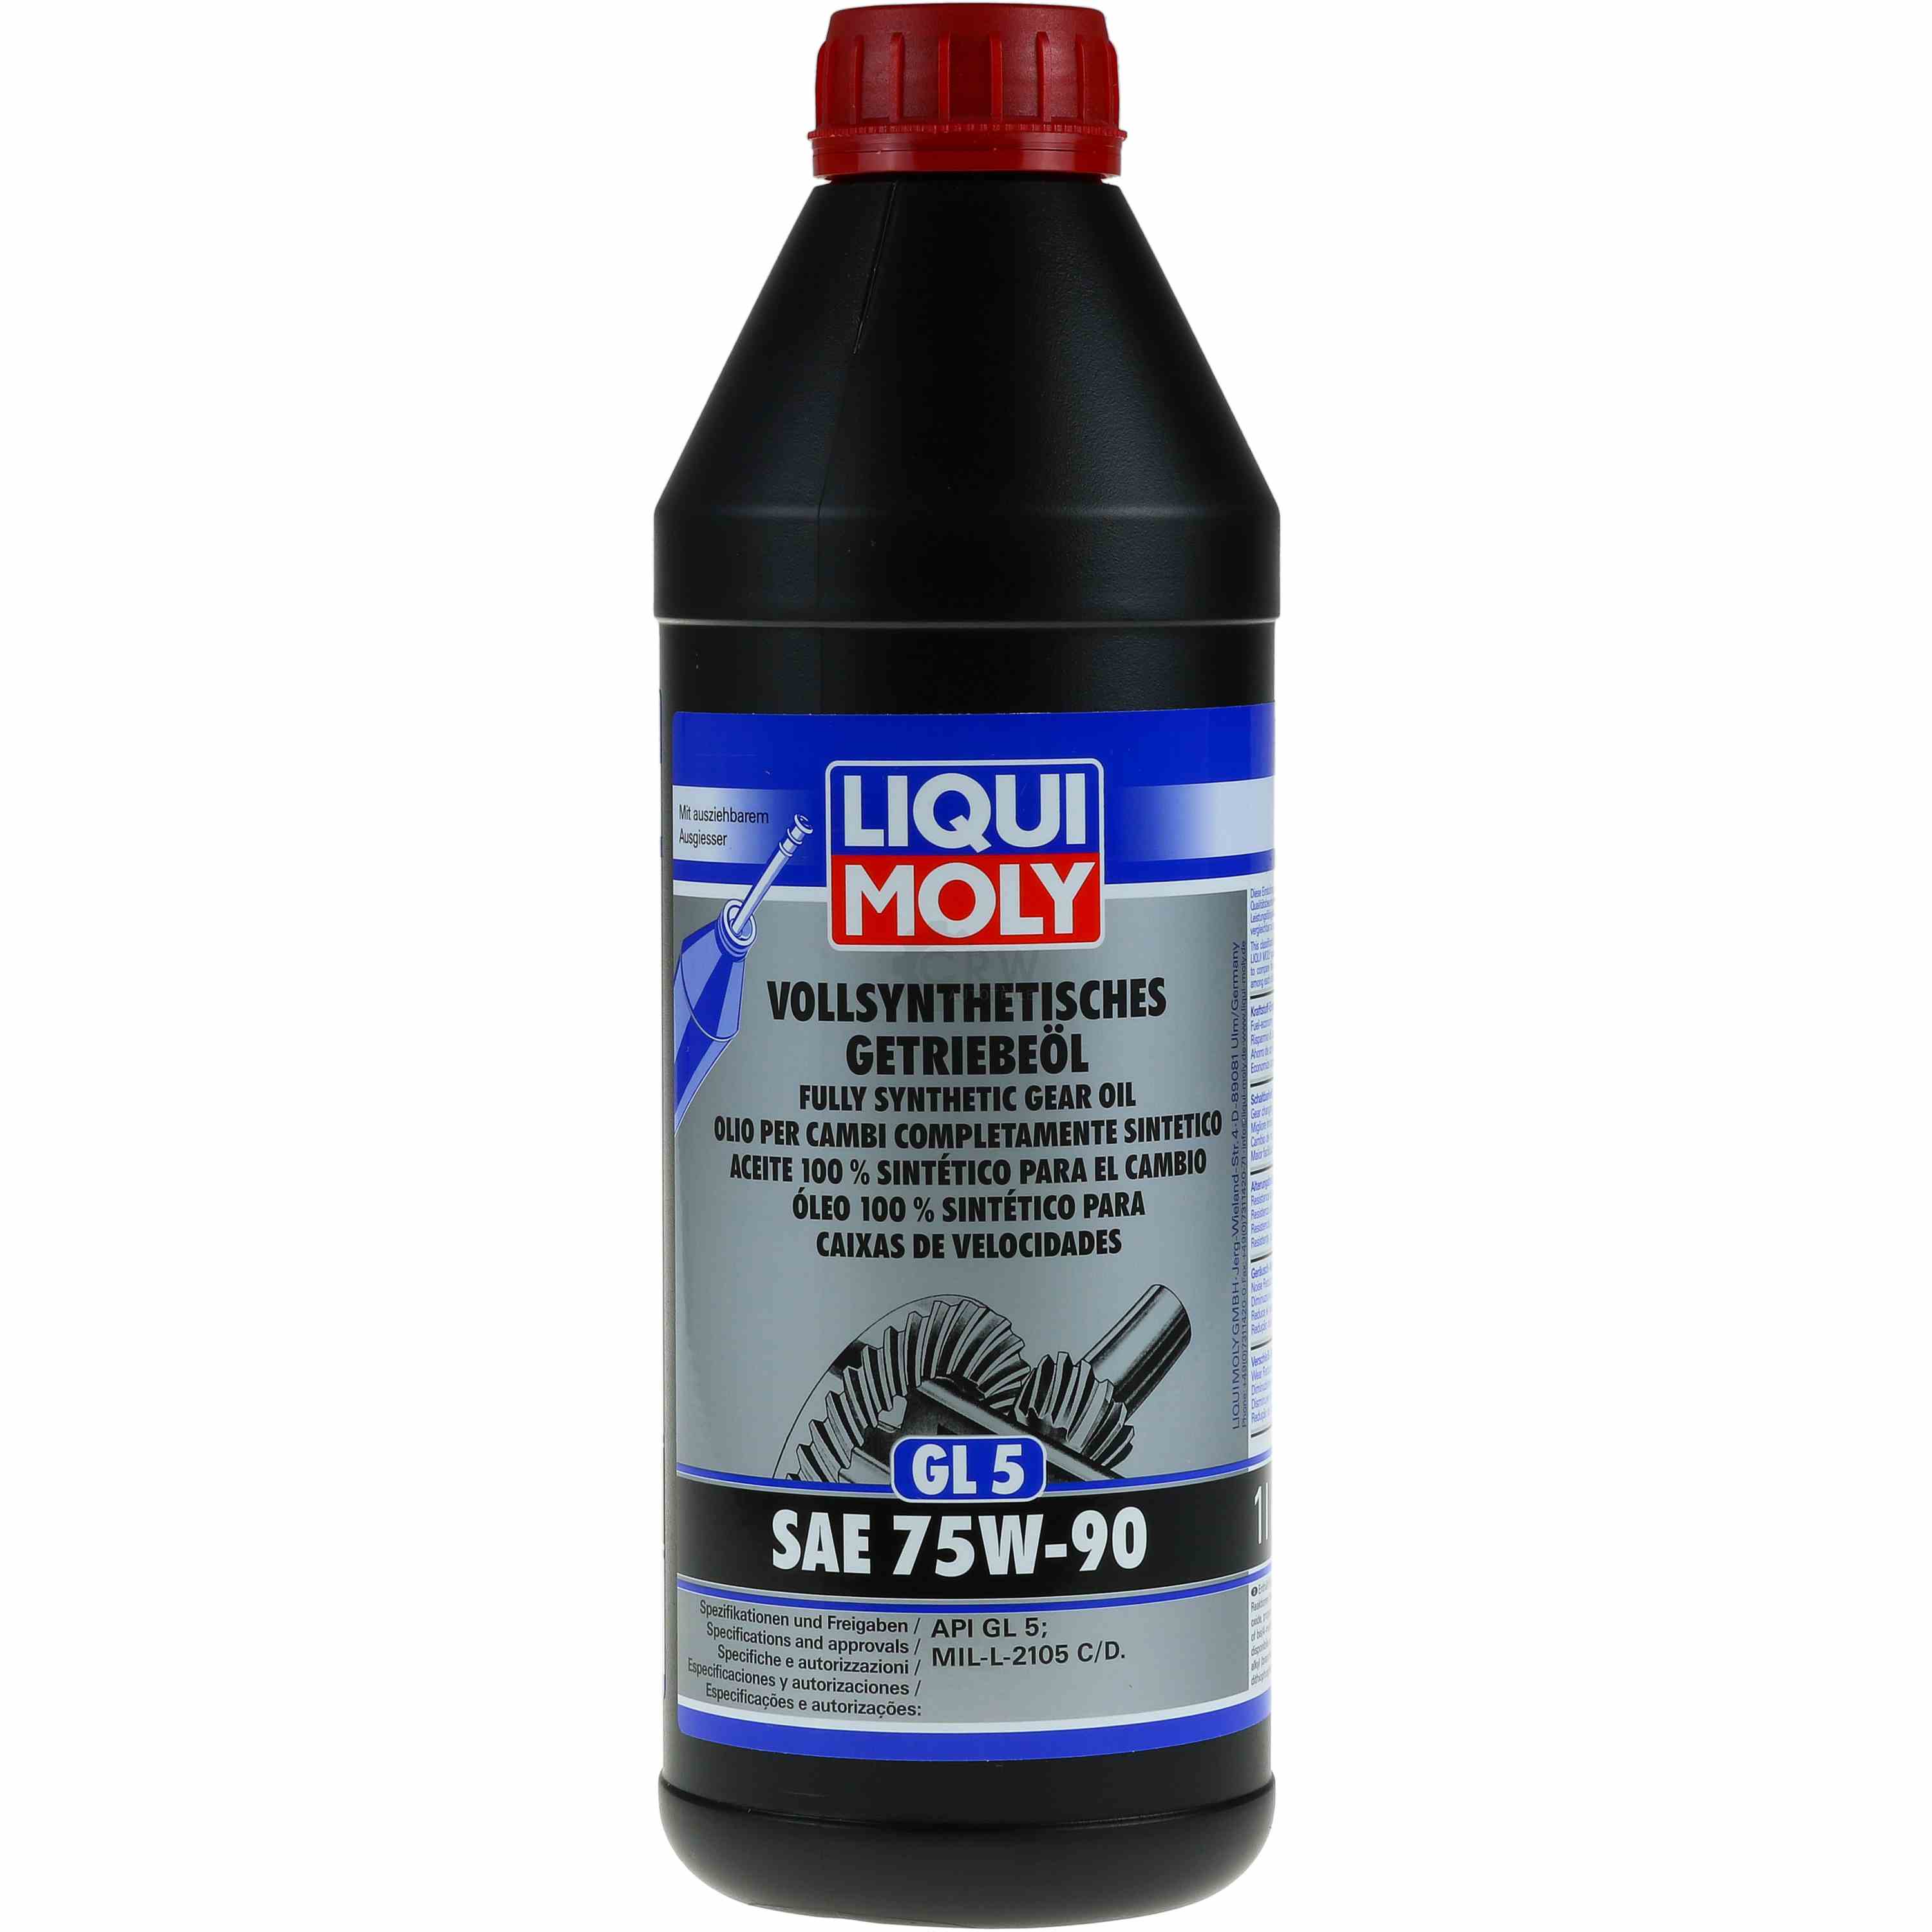 Liqui Moly 1L Vollsynthetisches Getriebeöl GL5 SAE 75W-90 MIL-L-2105 C/D